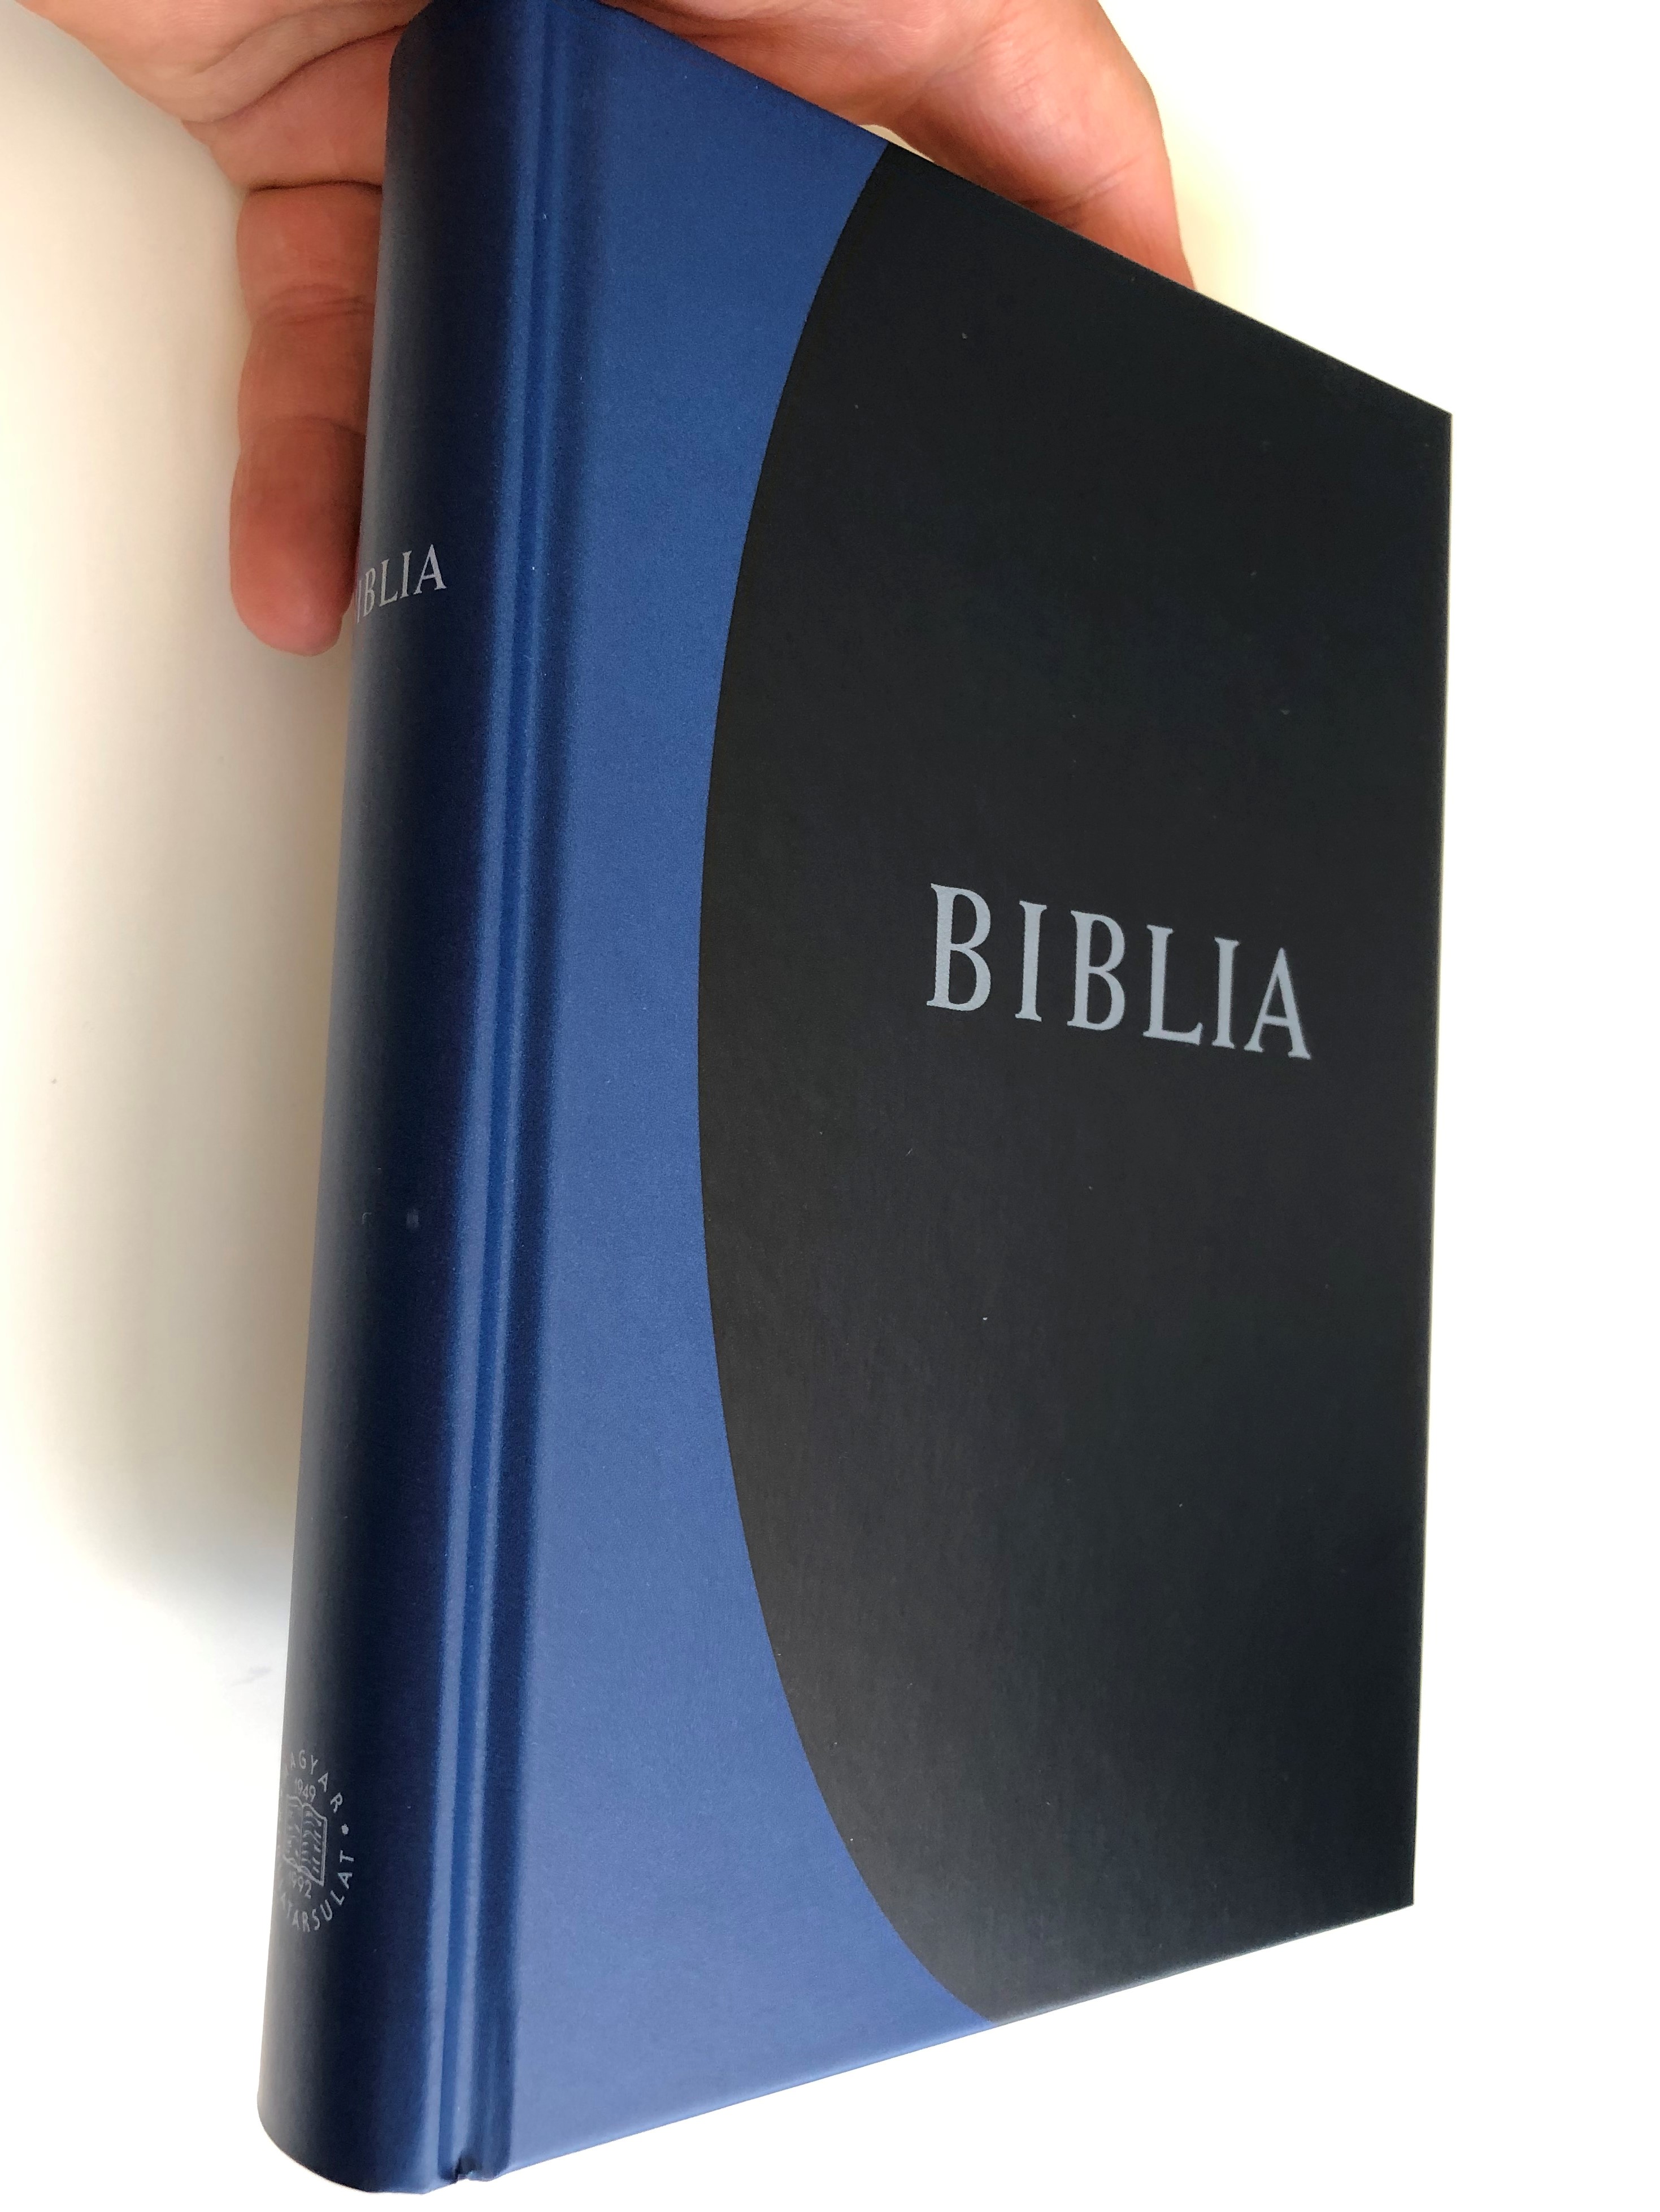 hungarian-protestant-bible-biblia-nagy-m-ret-kem-nyt-bl-s-hardcover-revide-lt-j-ford-t-s-r-f-2014-k-k-sz-nben-a5-size-2-.jpg